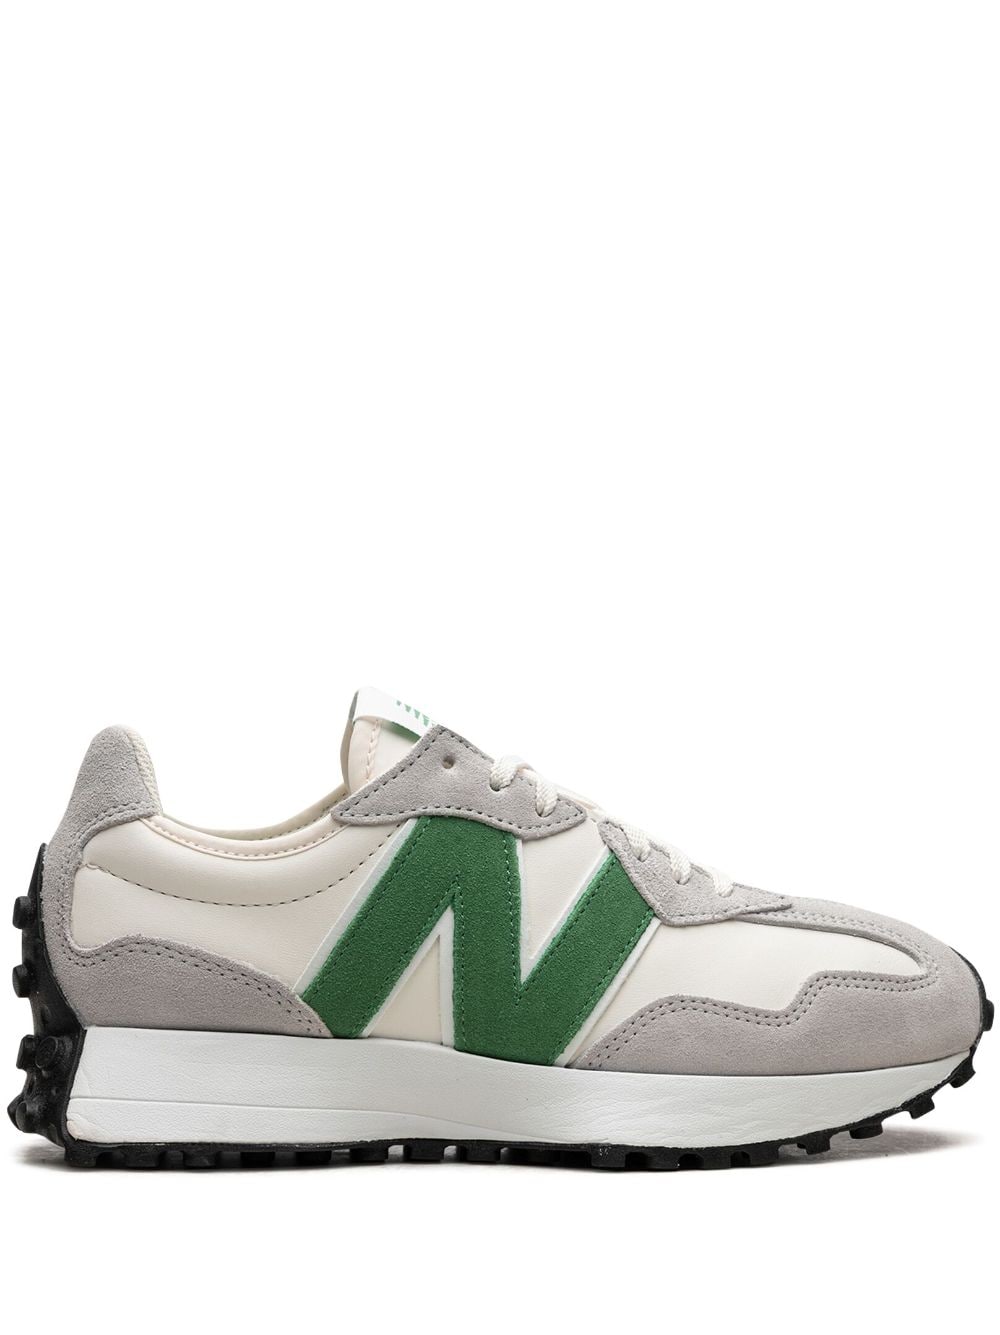 New Balance 327 "White/Green" sneakers von New Balance